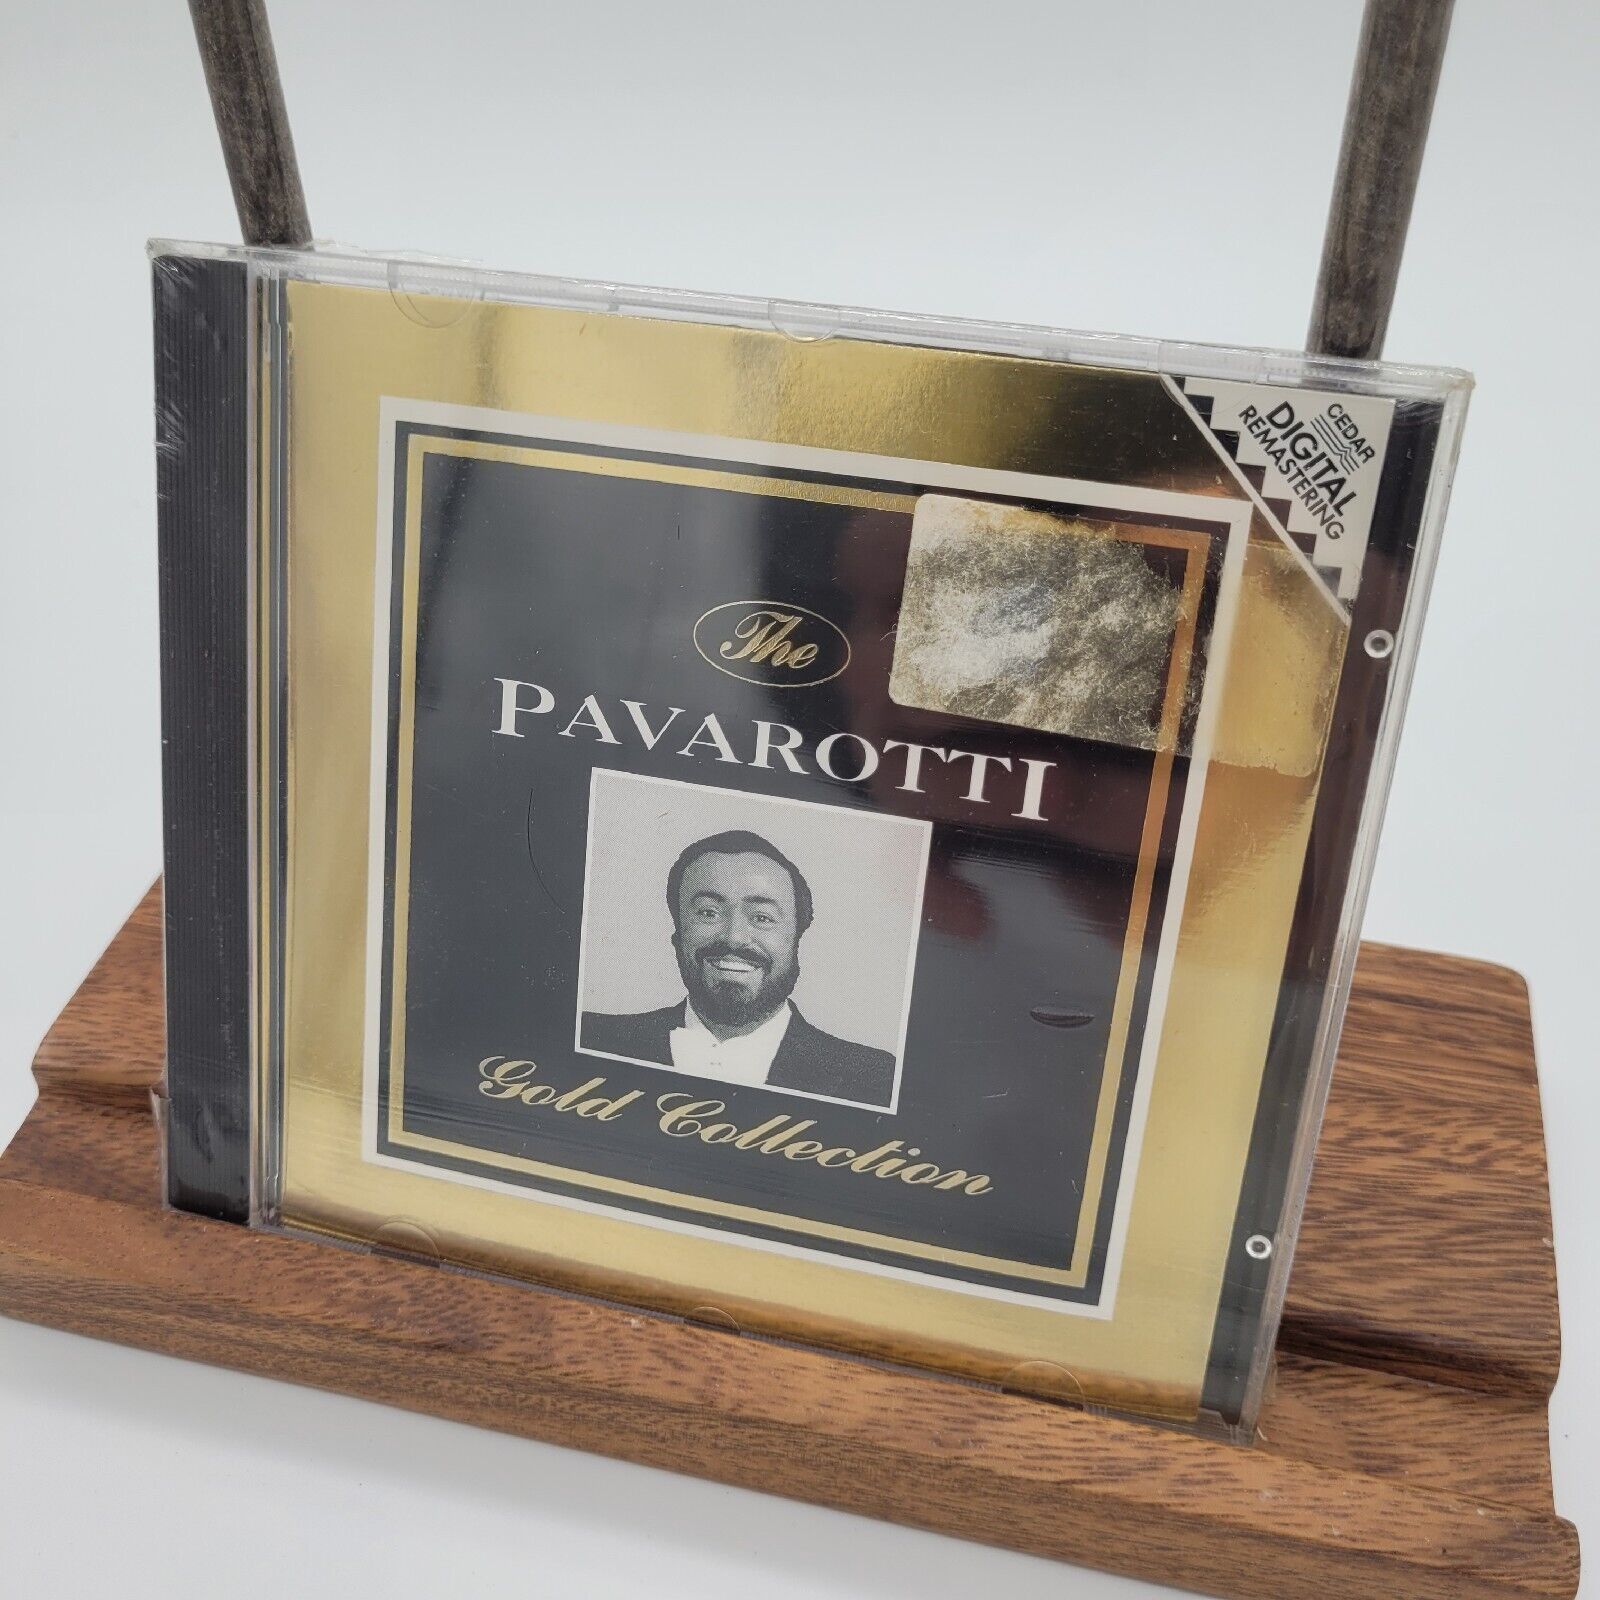 Factory Sealed Pavarotti Gold Collection CD Digital Dejavu Italy Import